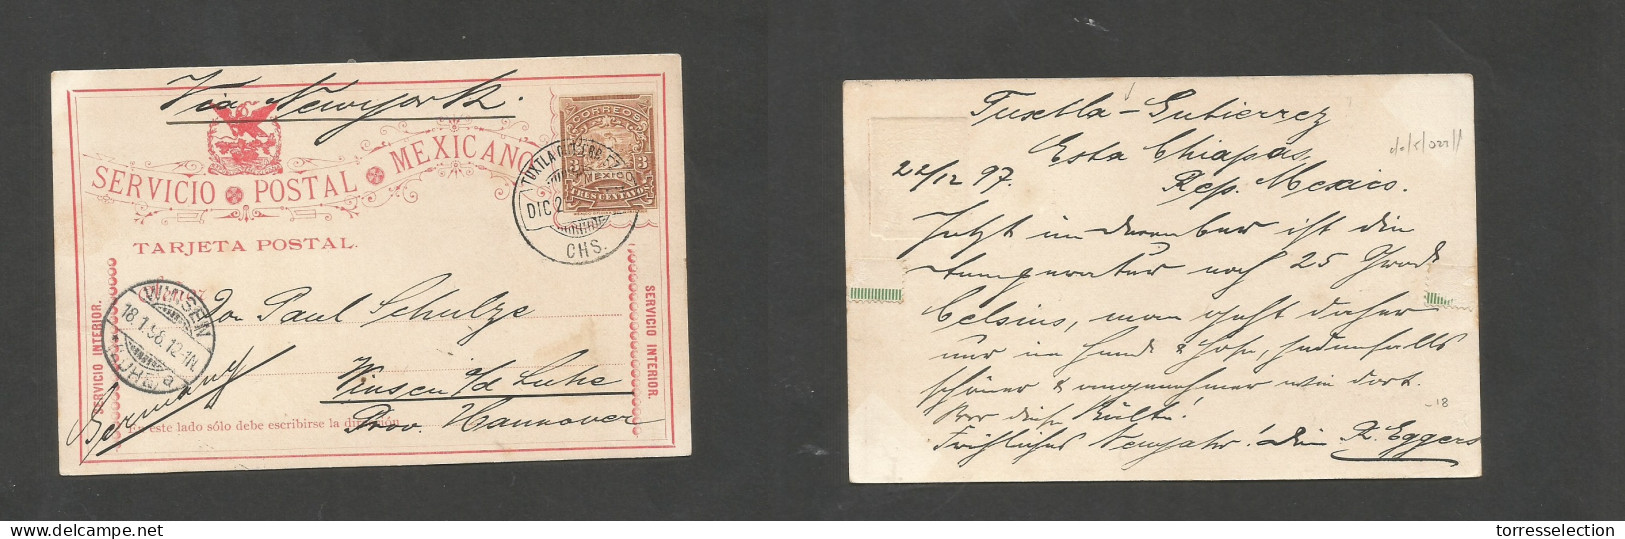 MEXICO - Stationery. 1897 (21 Dec) Tuxla Guerrero - Germany, Winsen (18 Jan 98) 3c Brown Militar Issue Stat Card. SPM. F - Mexico